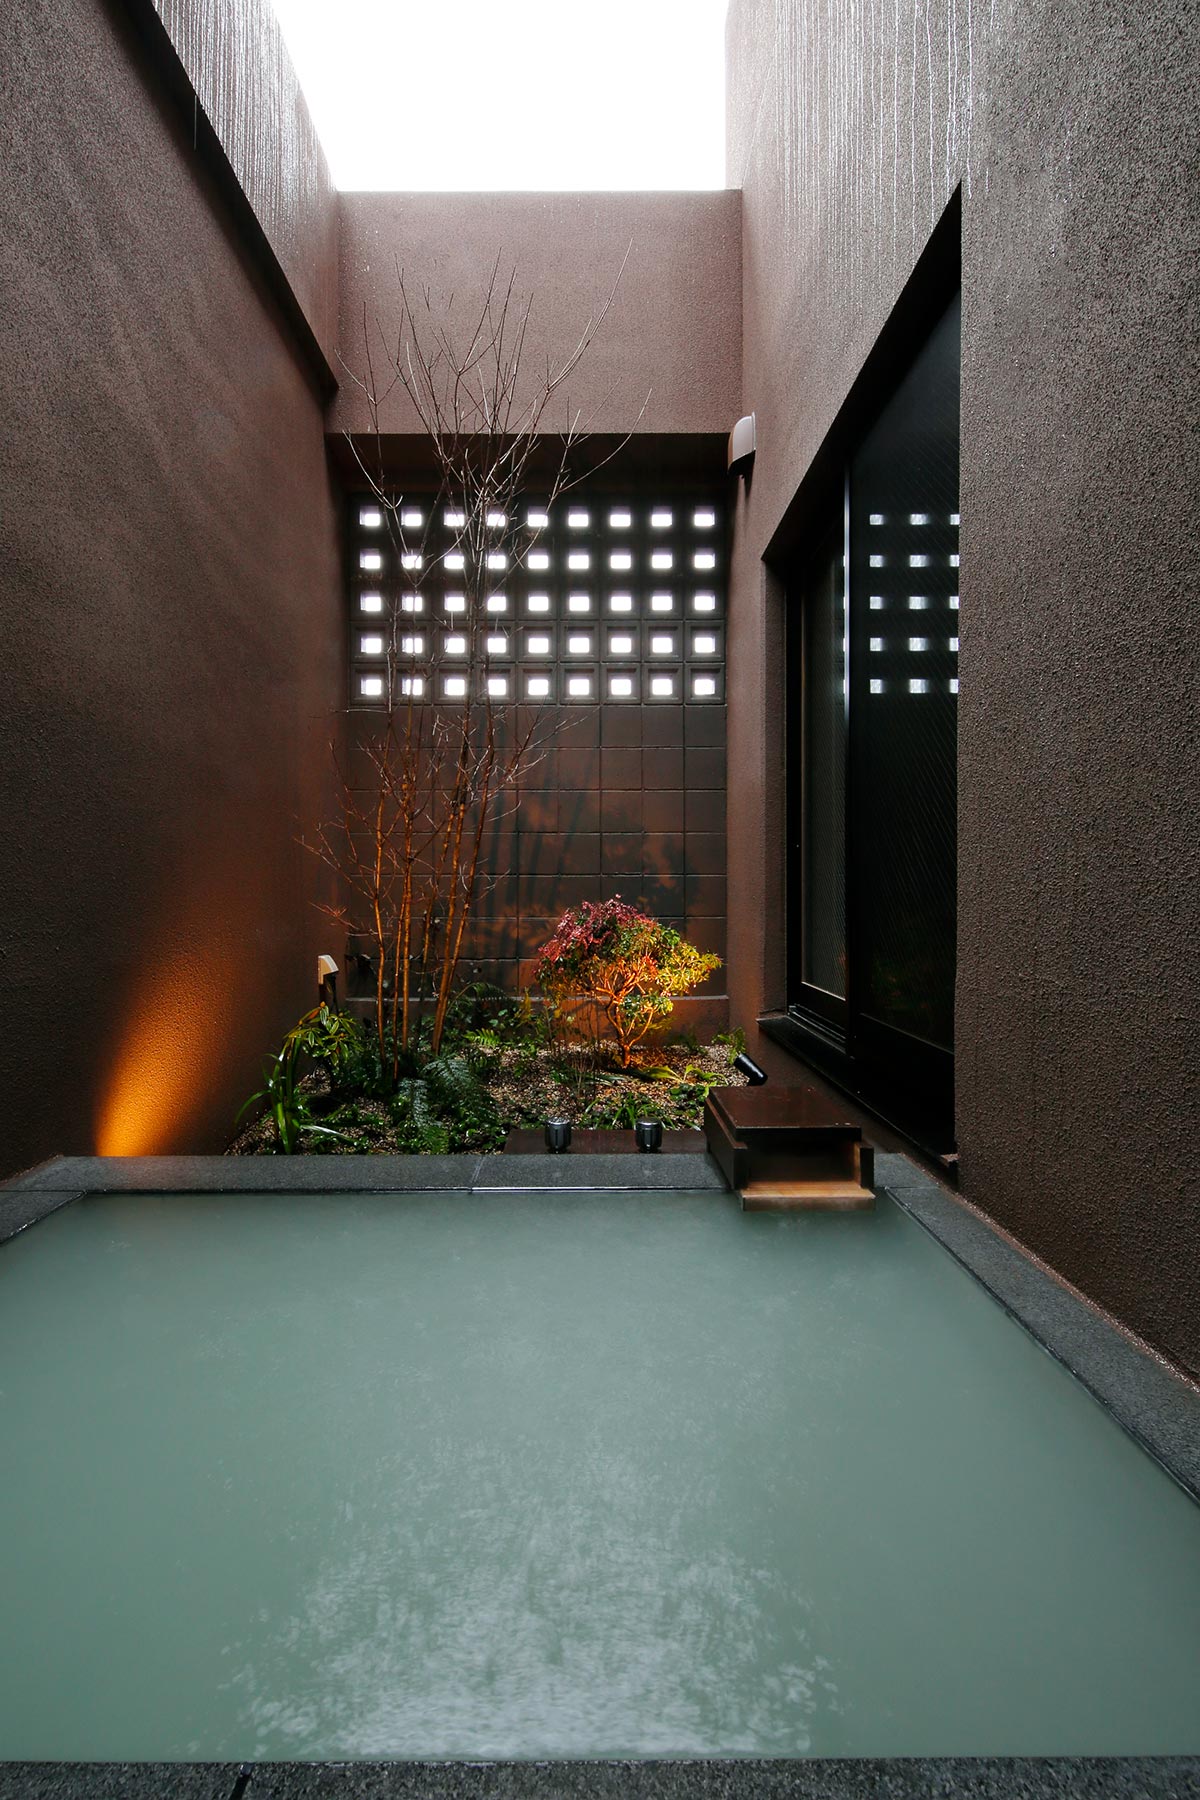 With miniature garden open-air bath